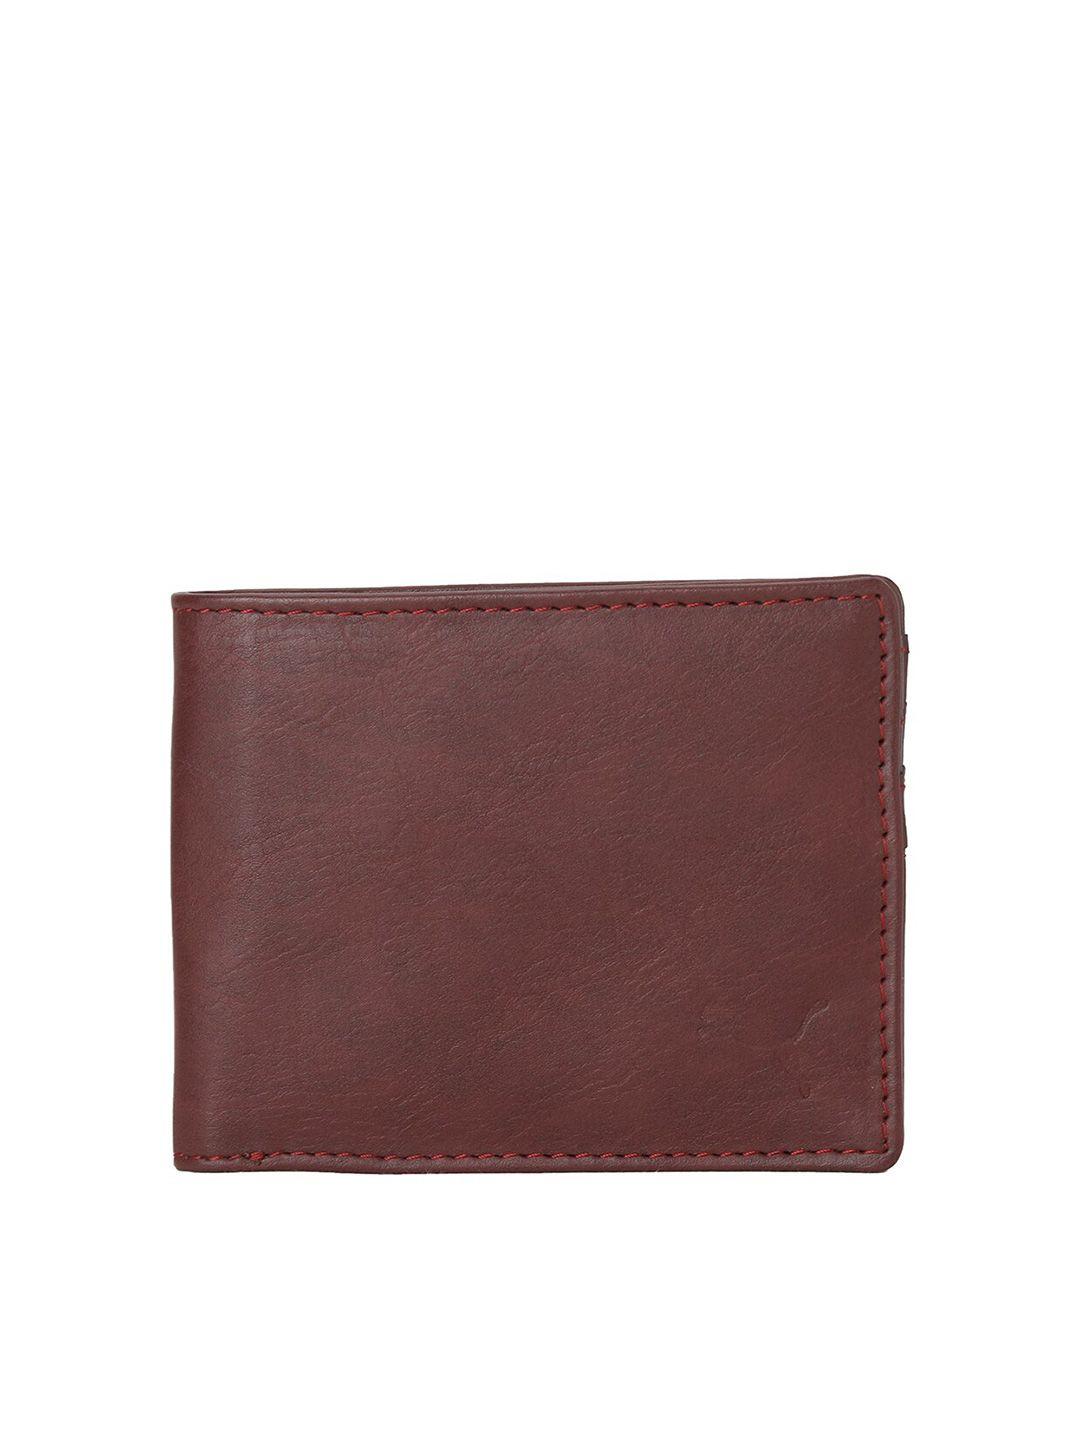 puma unisex brown two fold wallet